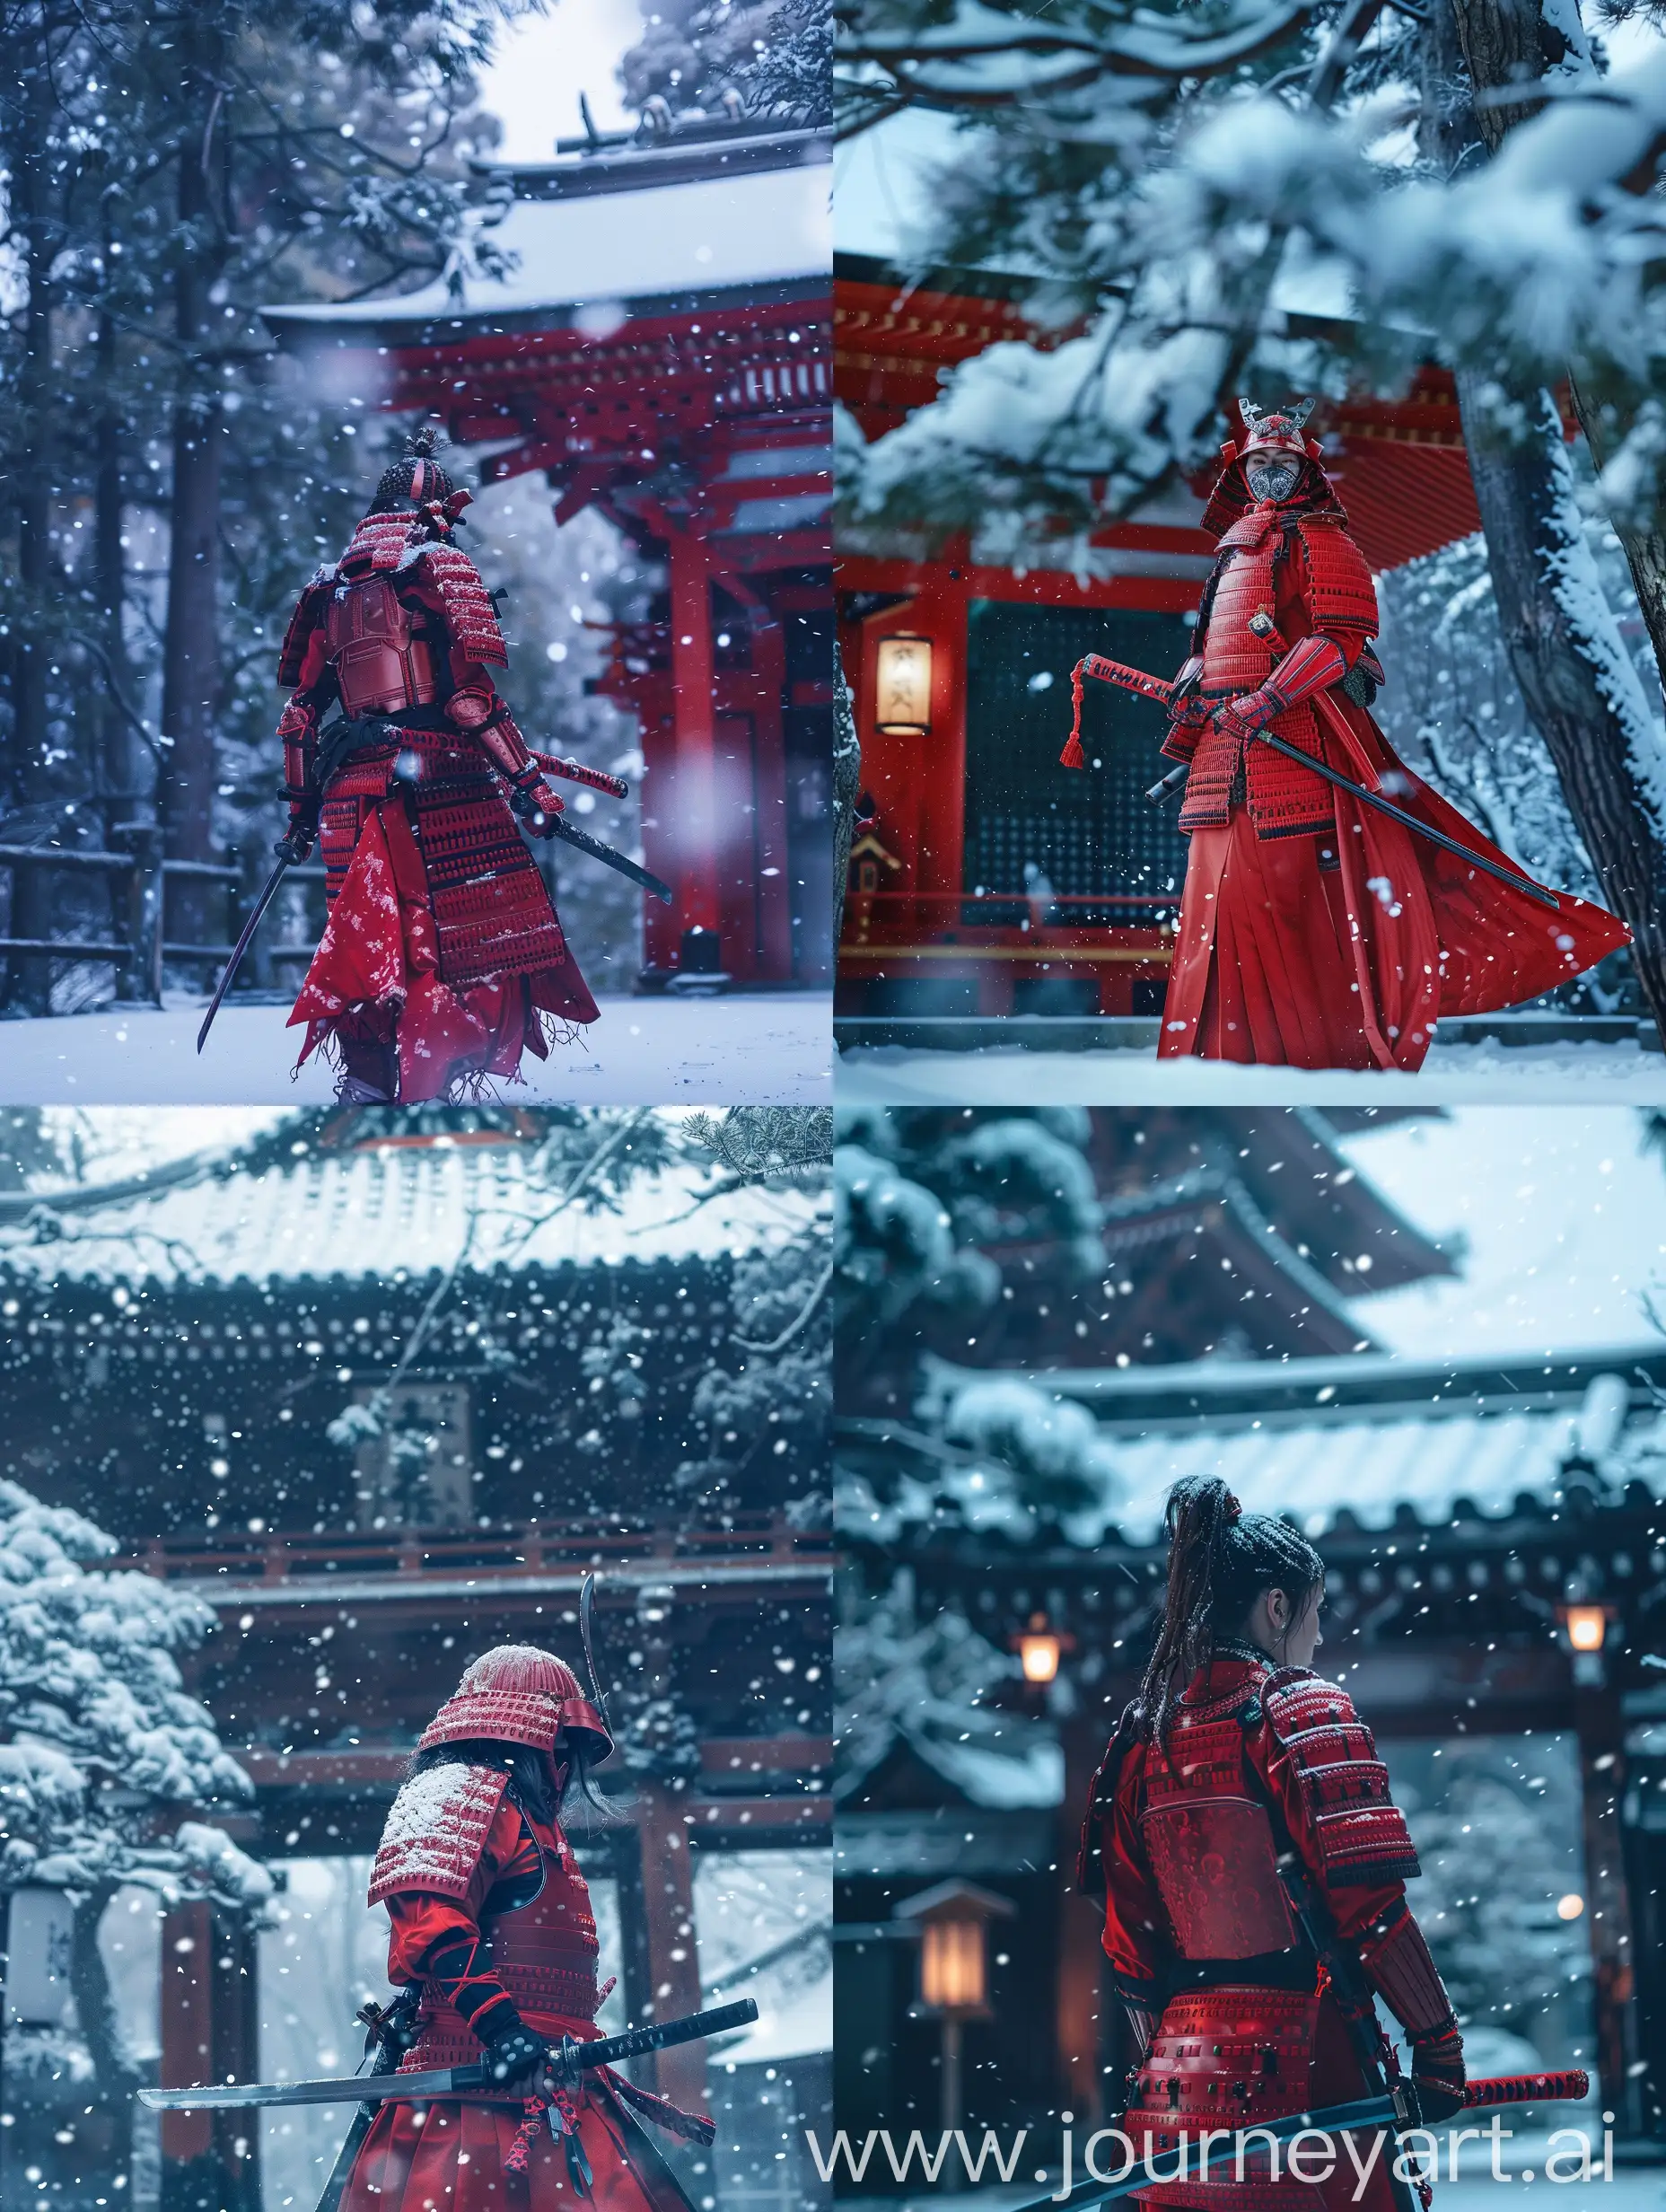 HighFashion-Samurai-Warrior-Red-Armor-in-Snowy-Temple-Setting